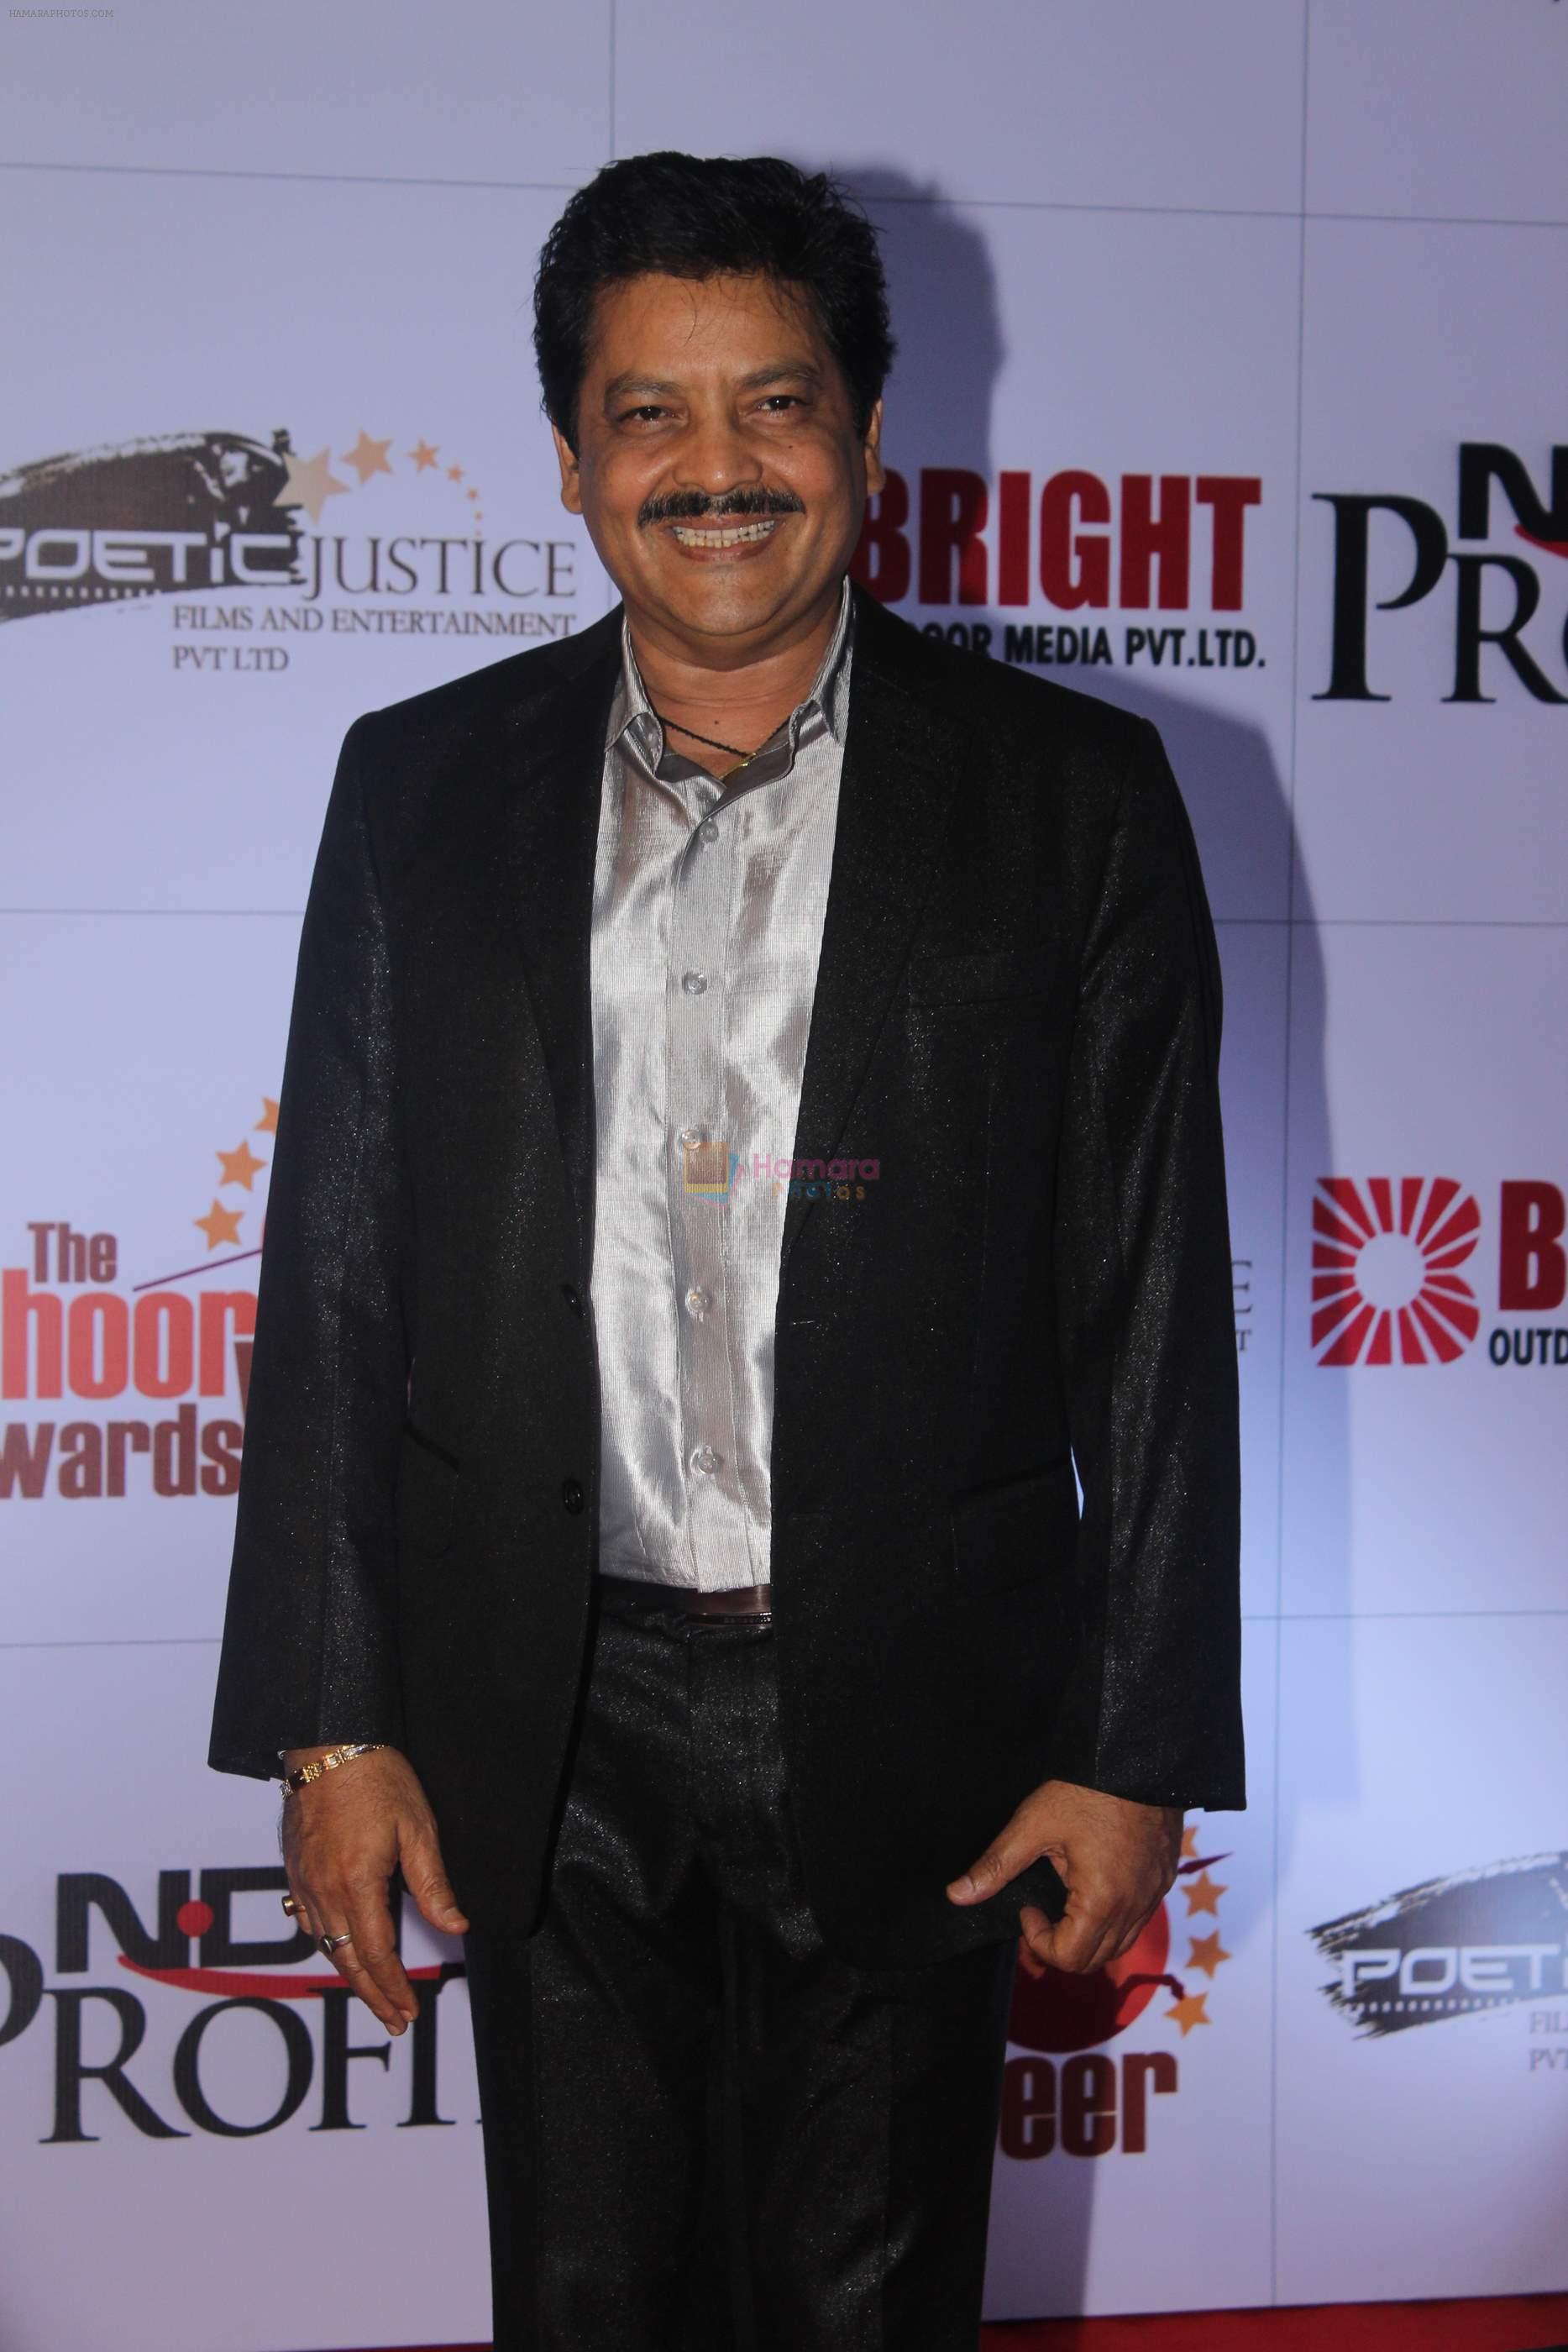 Udit Narayan at Shoorveer Awards in Mumbai on 14th March